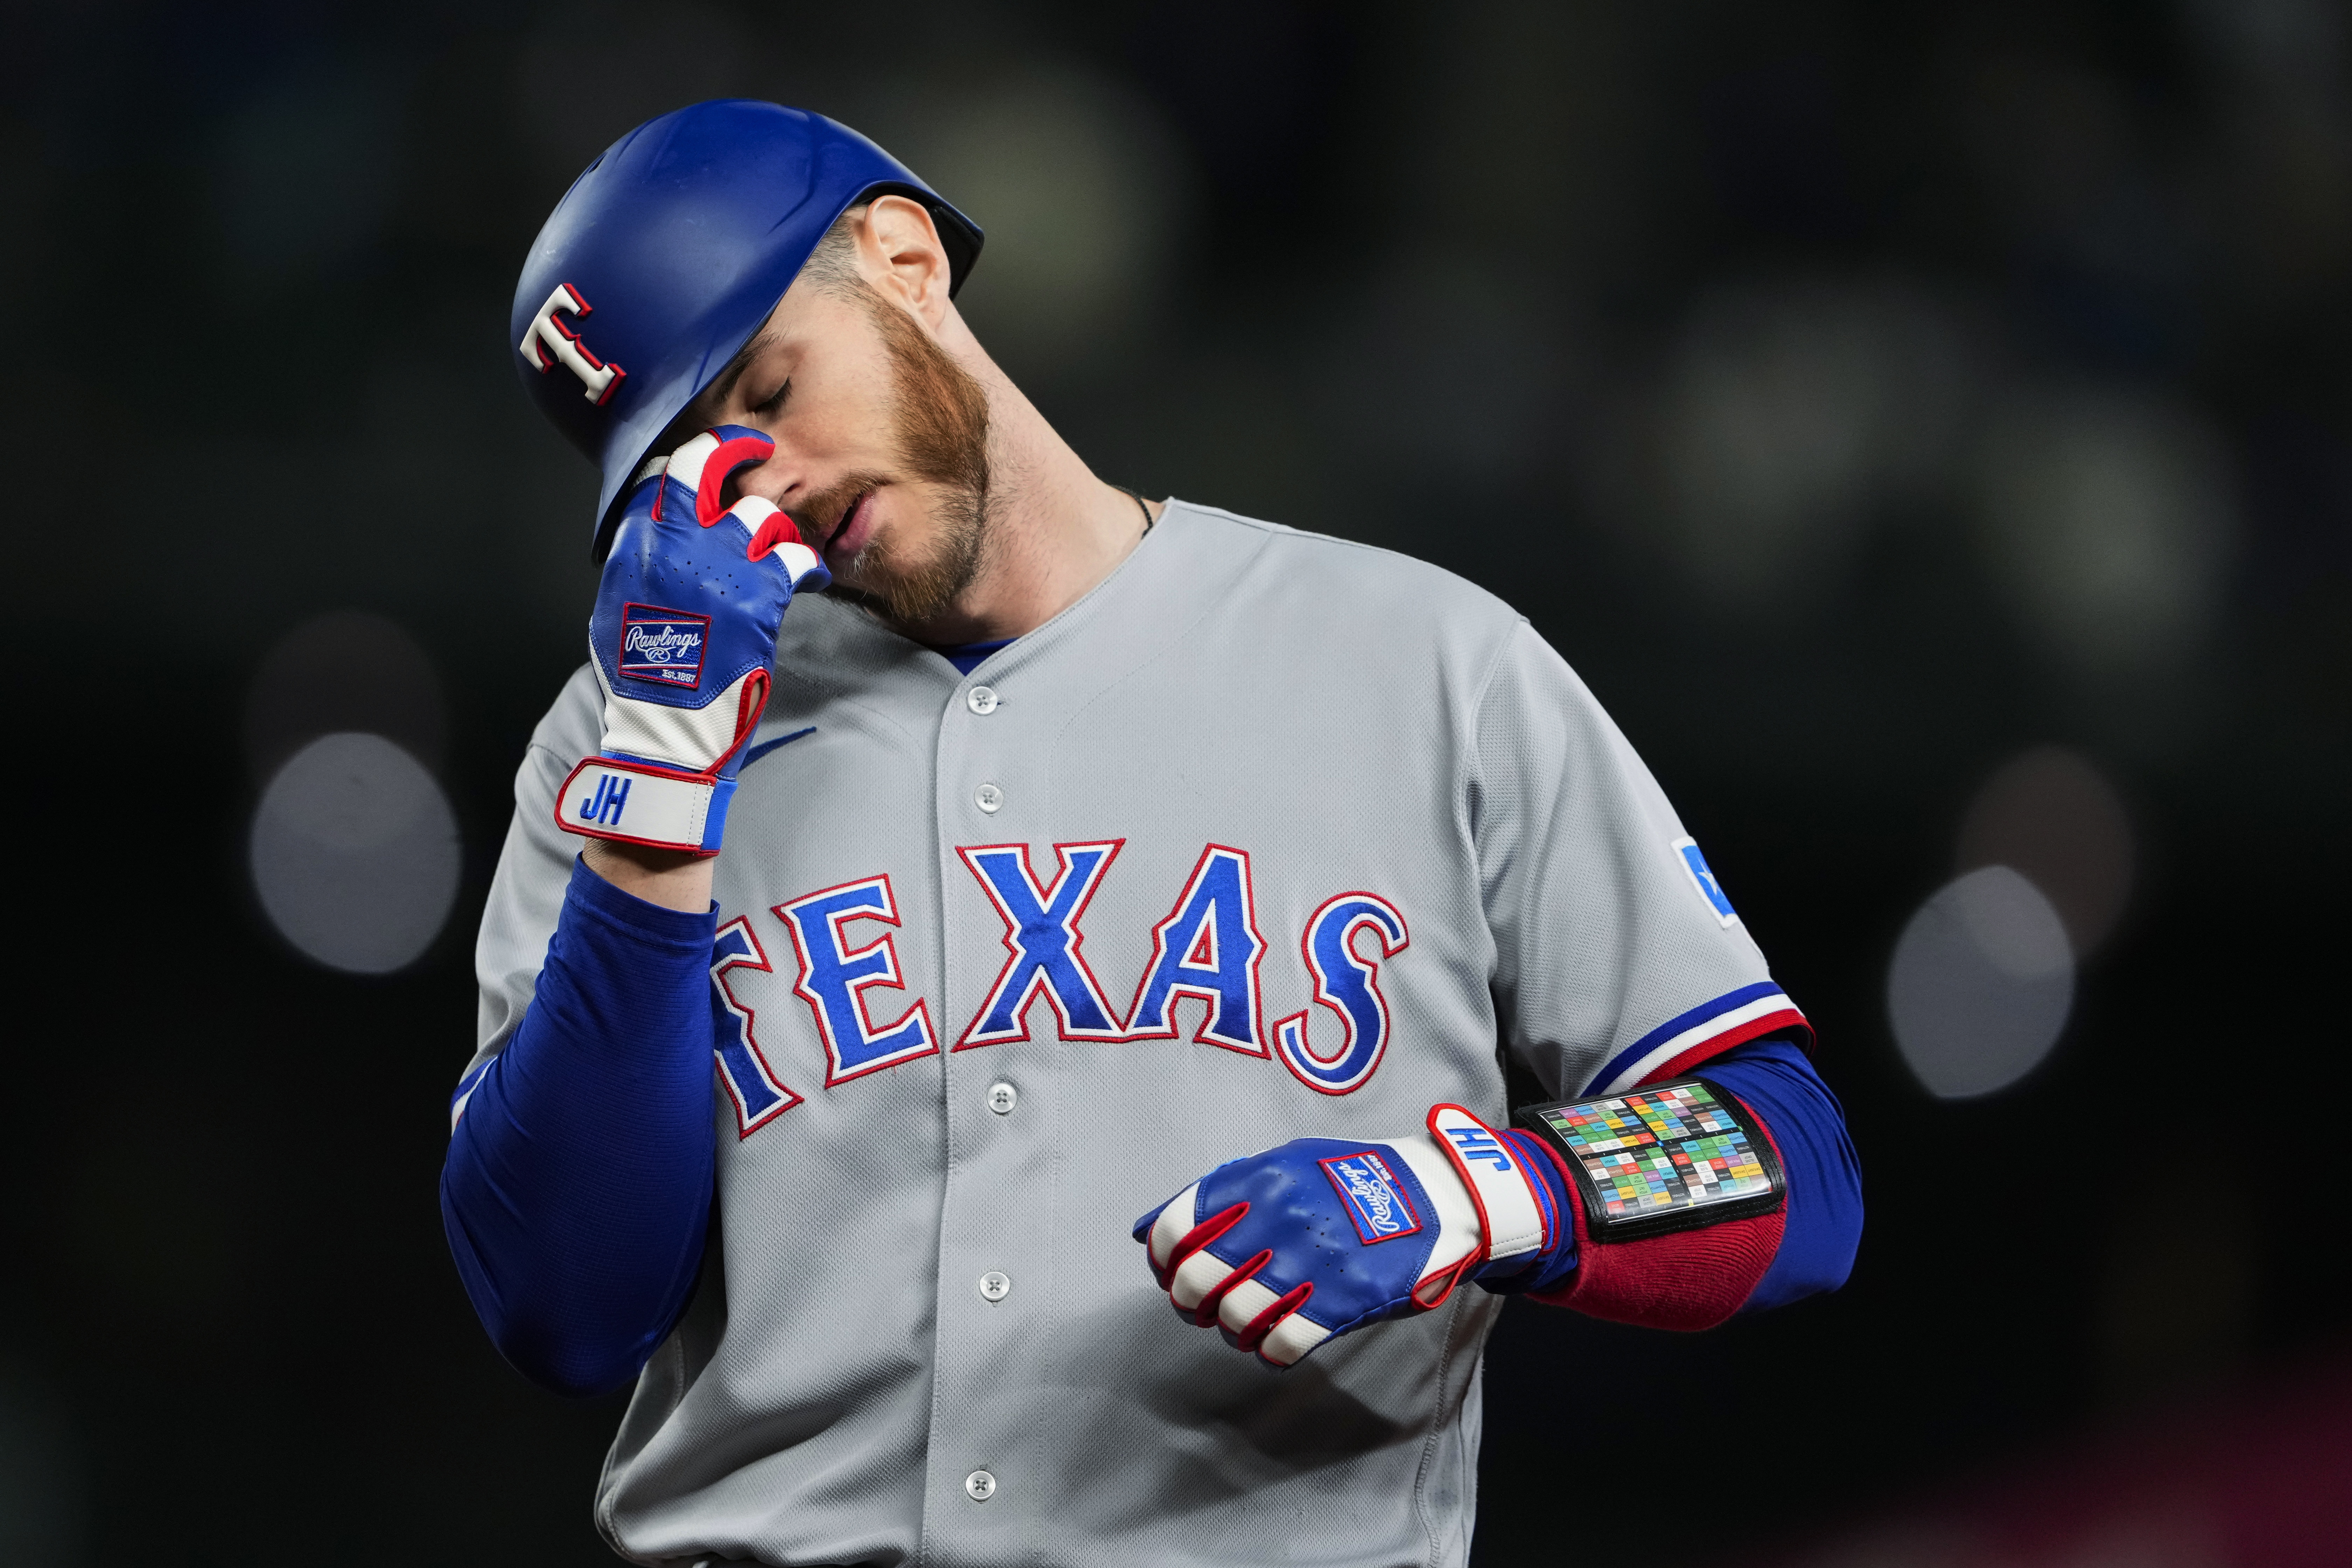 Rookie Cody Bradford Wins MLB First Game, Texas Rangers Down